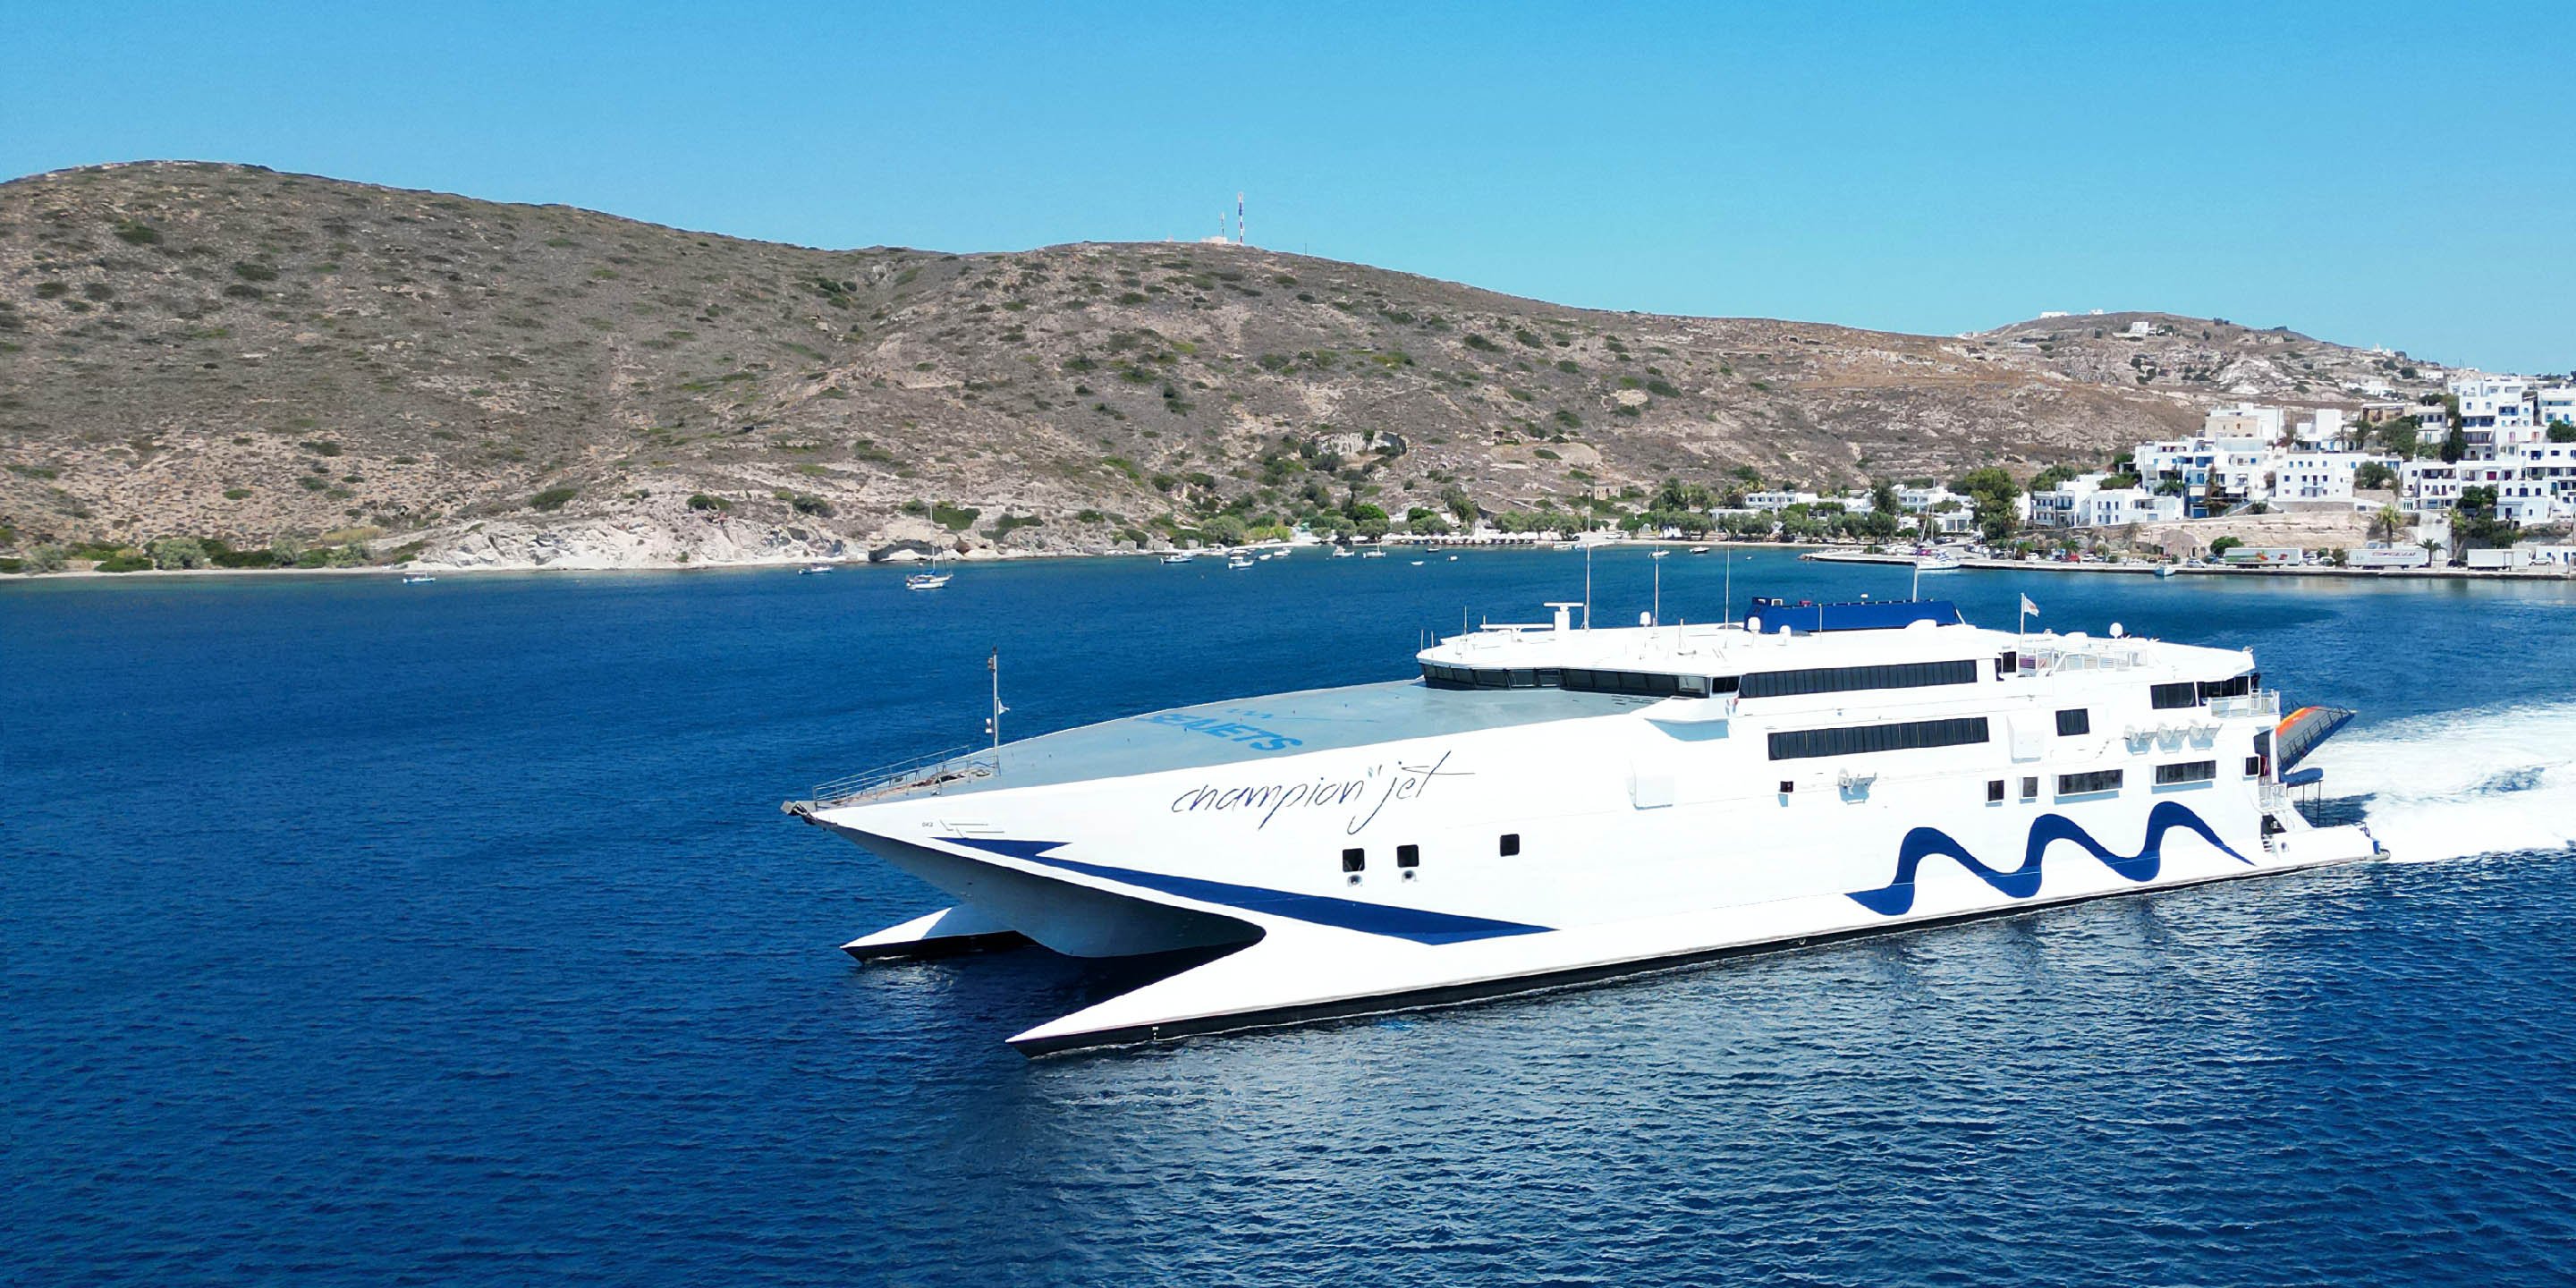 The Champion Jet of Seajets leaving the port of Milos for Santorini